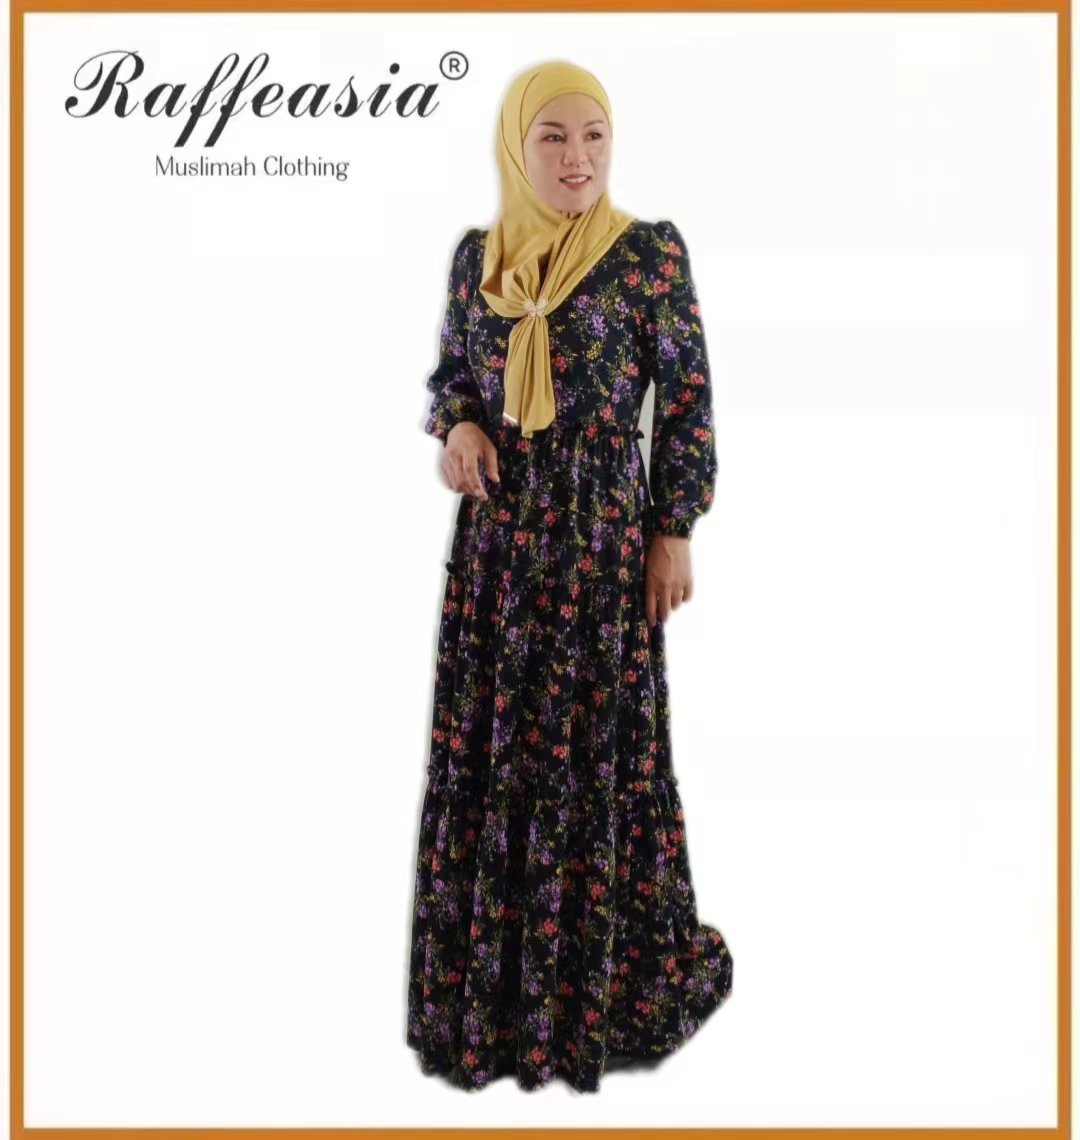 NEW&#128293;Raffeasia Dress Muslimah Floral Design 3 Layer Ready Stock